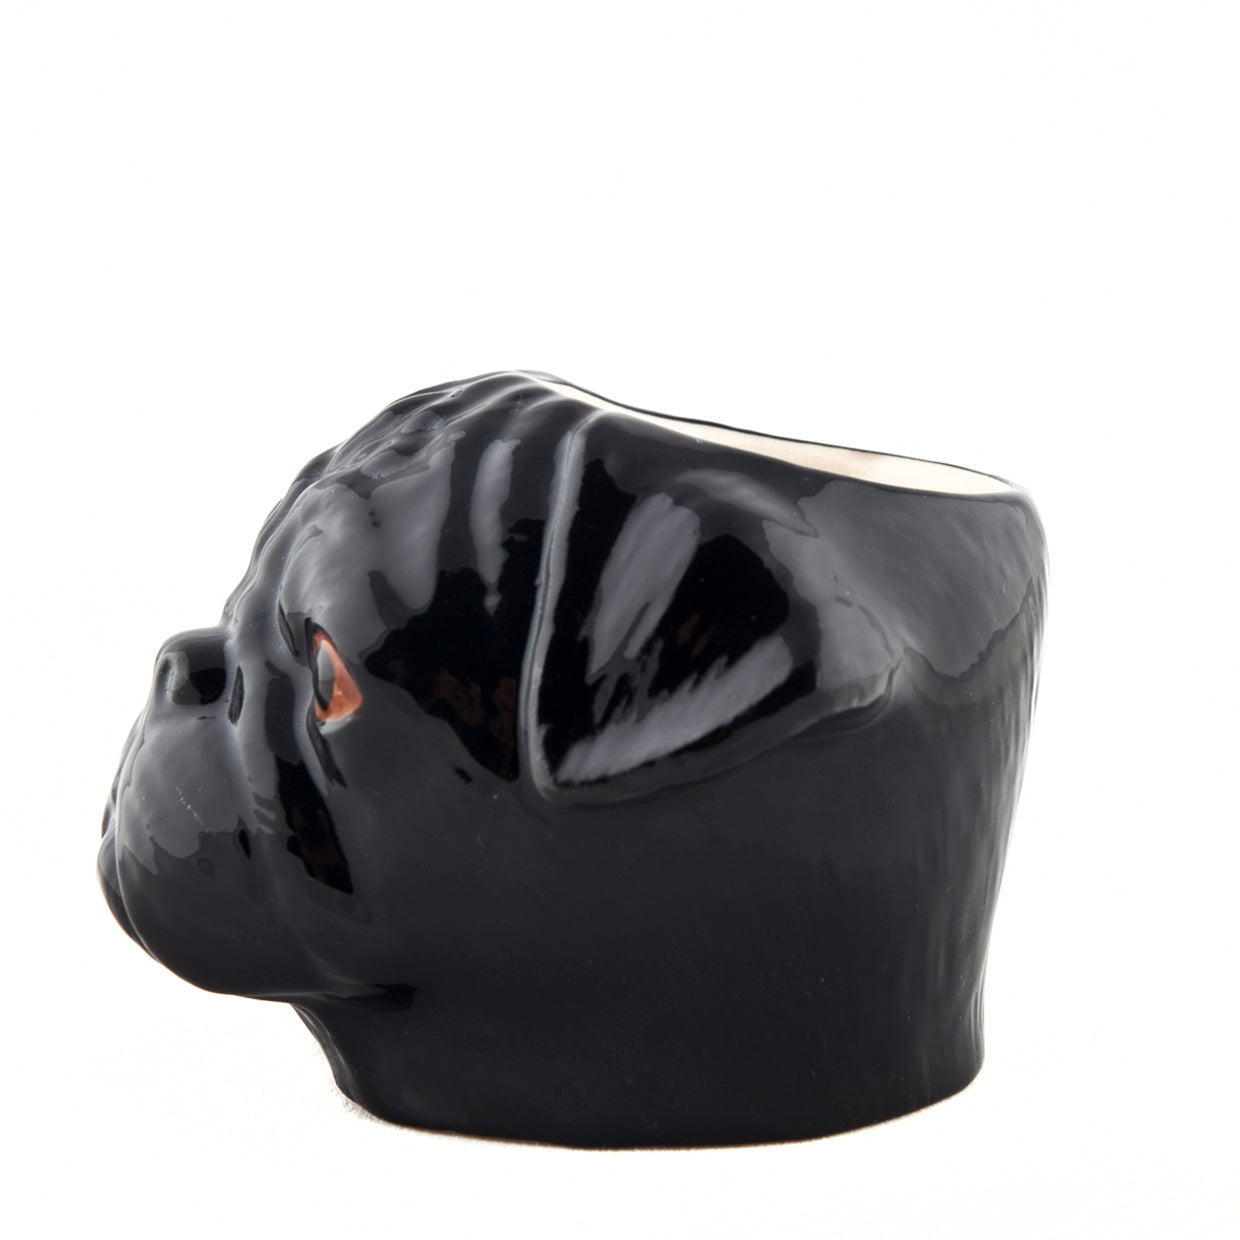 Black Pug Face Egg Cup